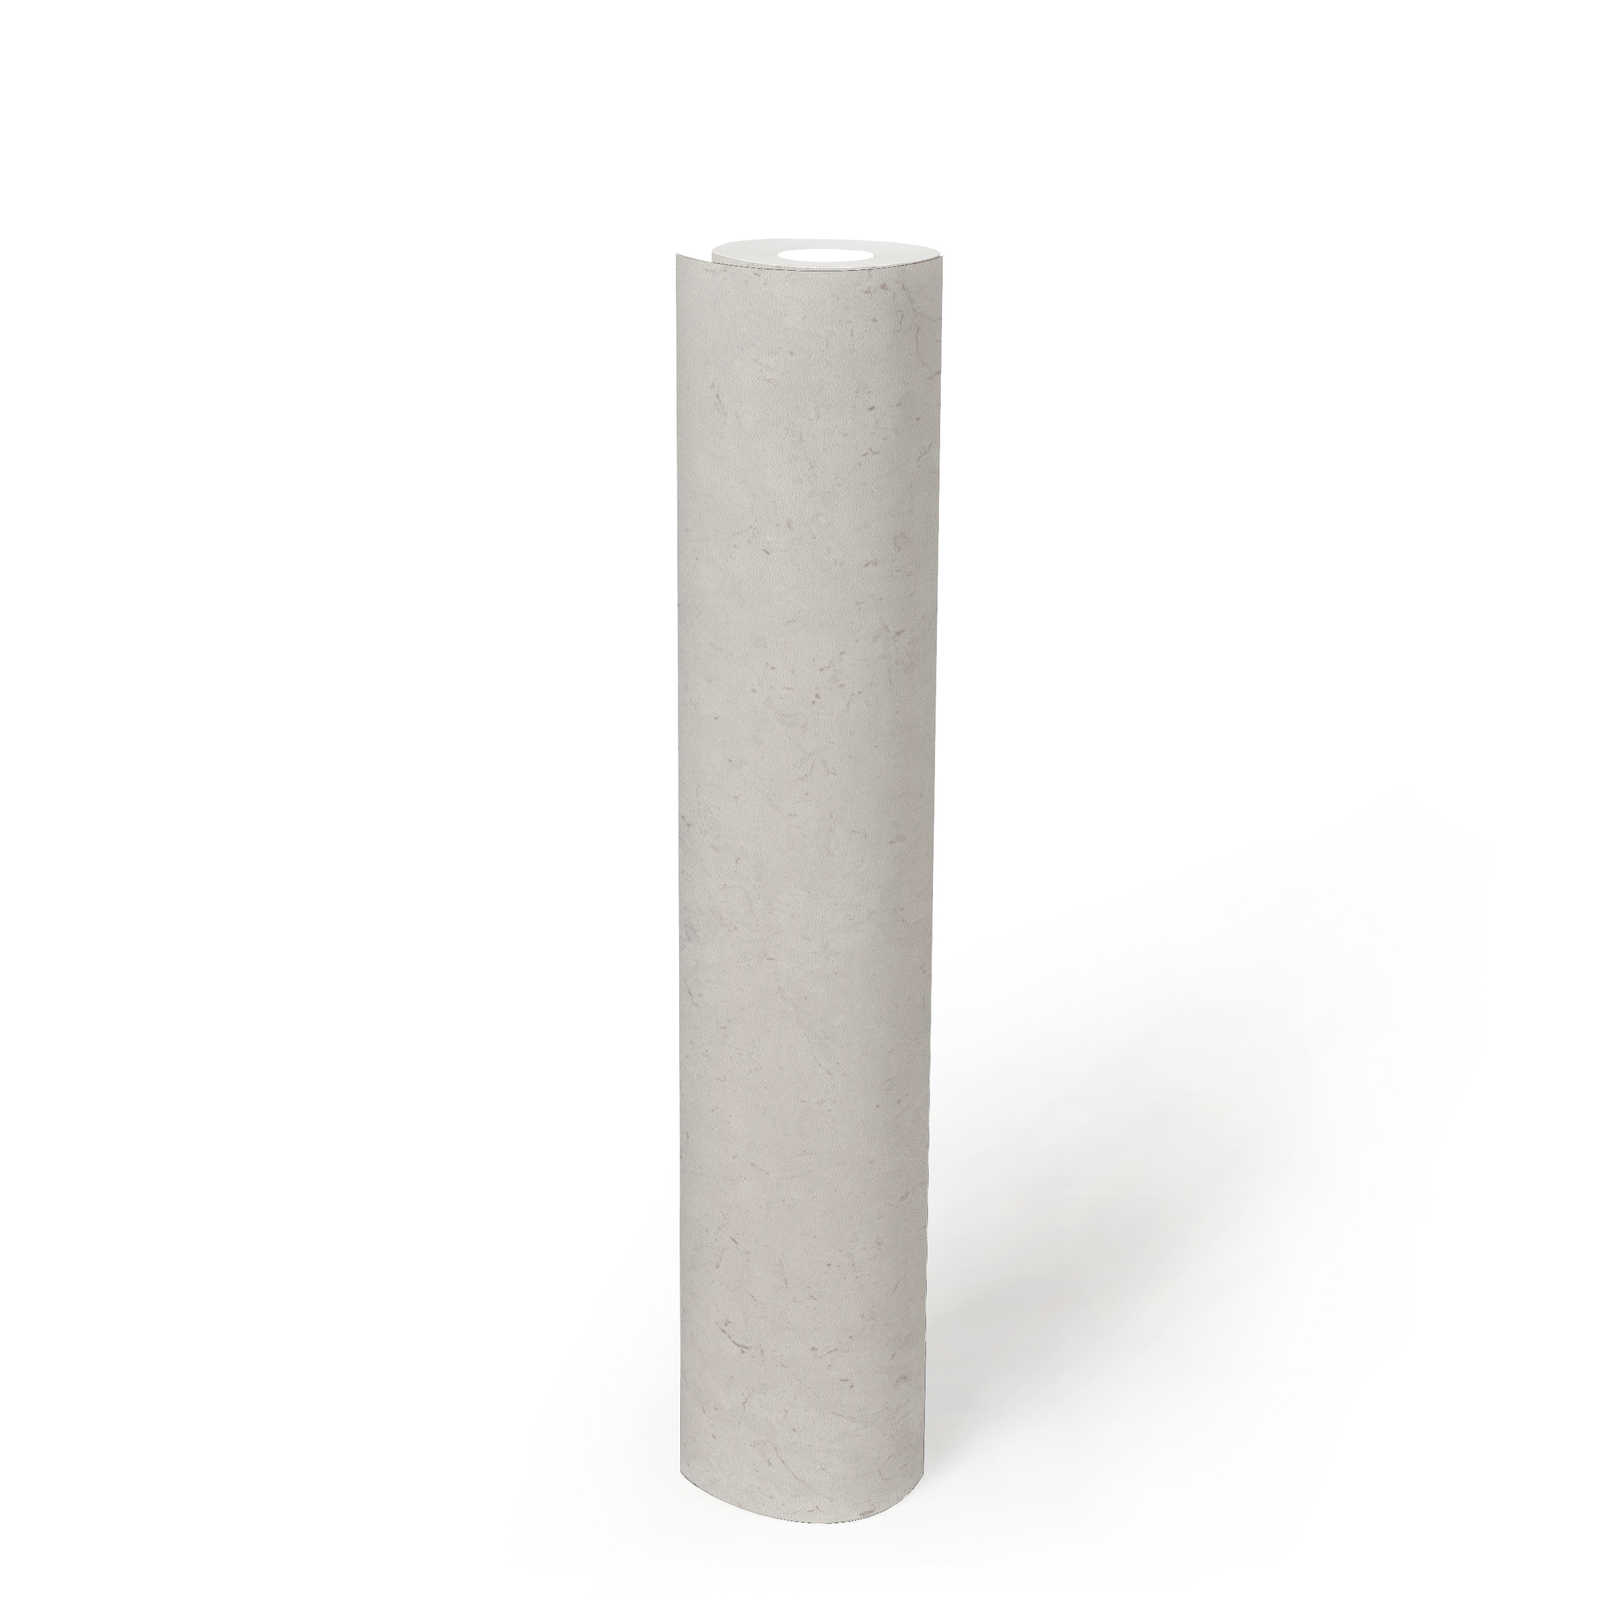             Vliestapete einfarbig mit Betonoptik – Grau, Weiß
        